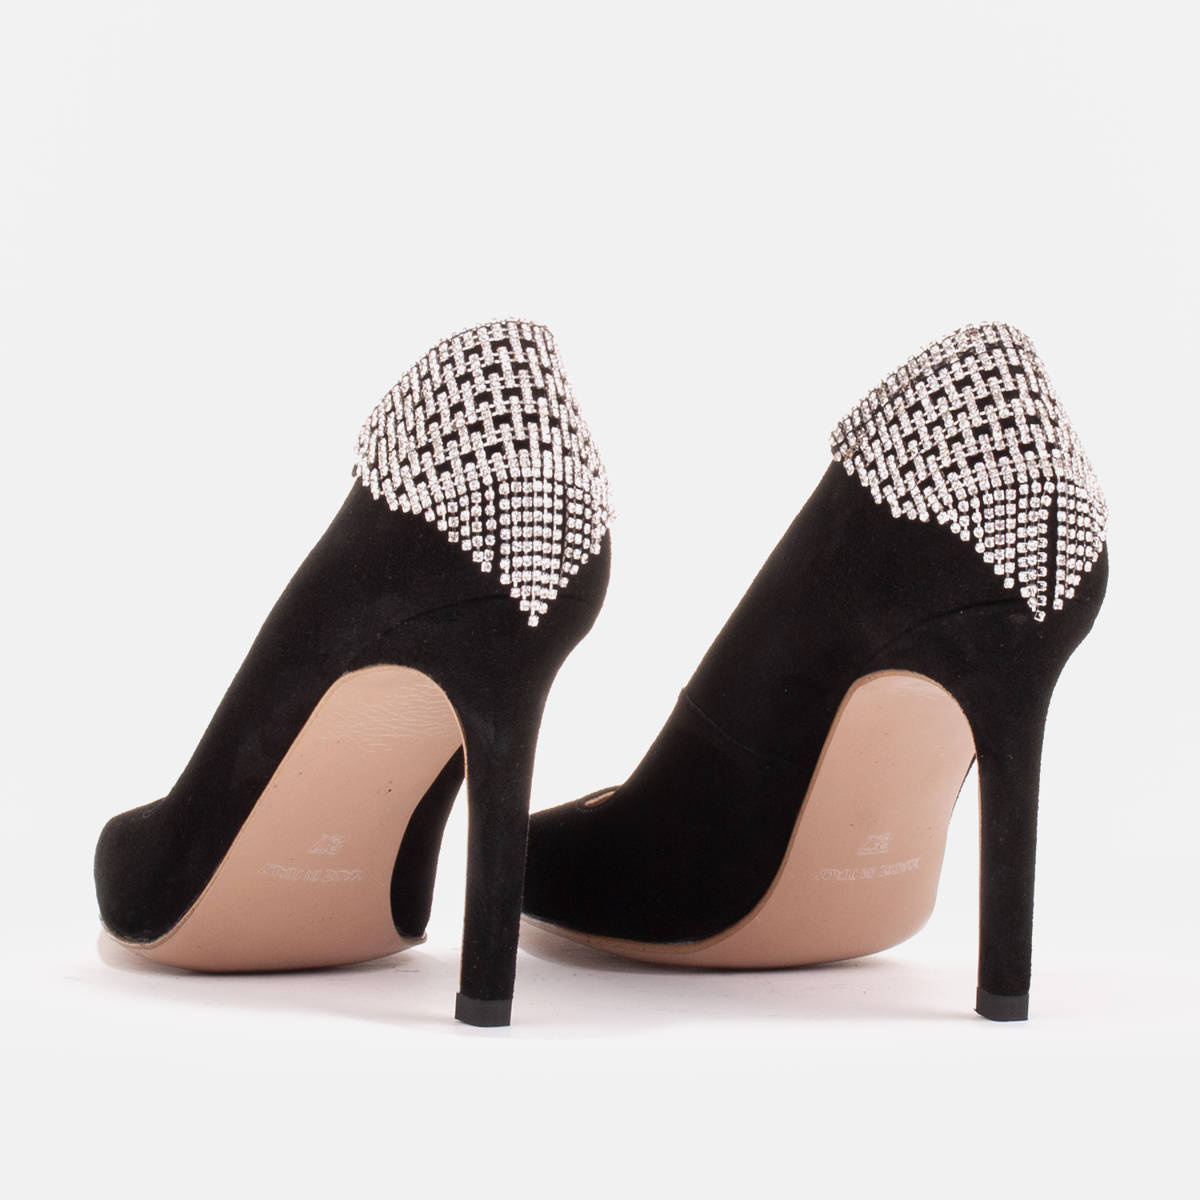 Suede heels with accessories